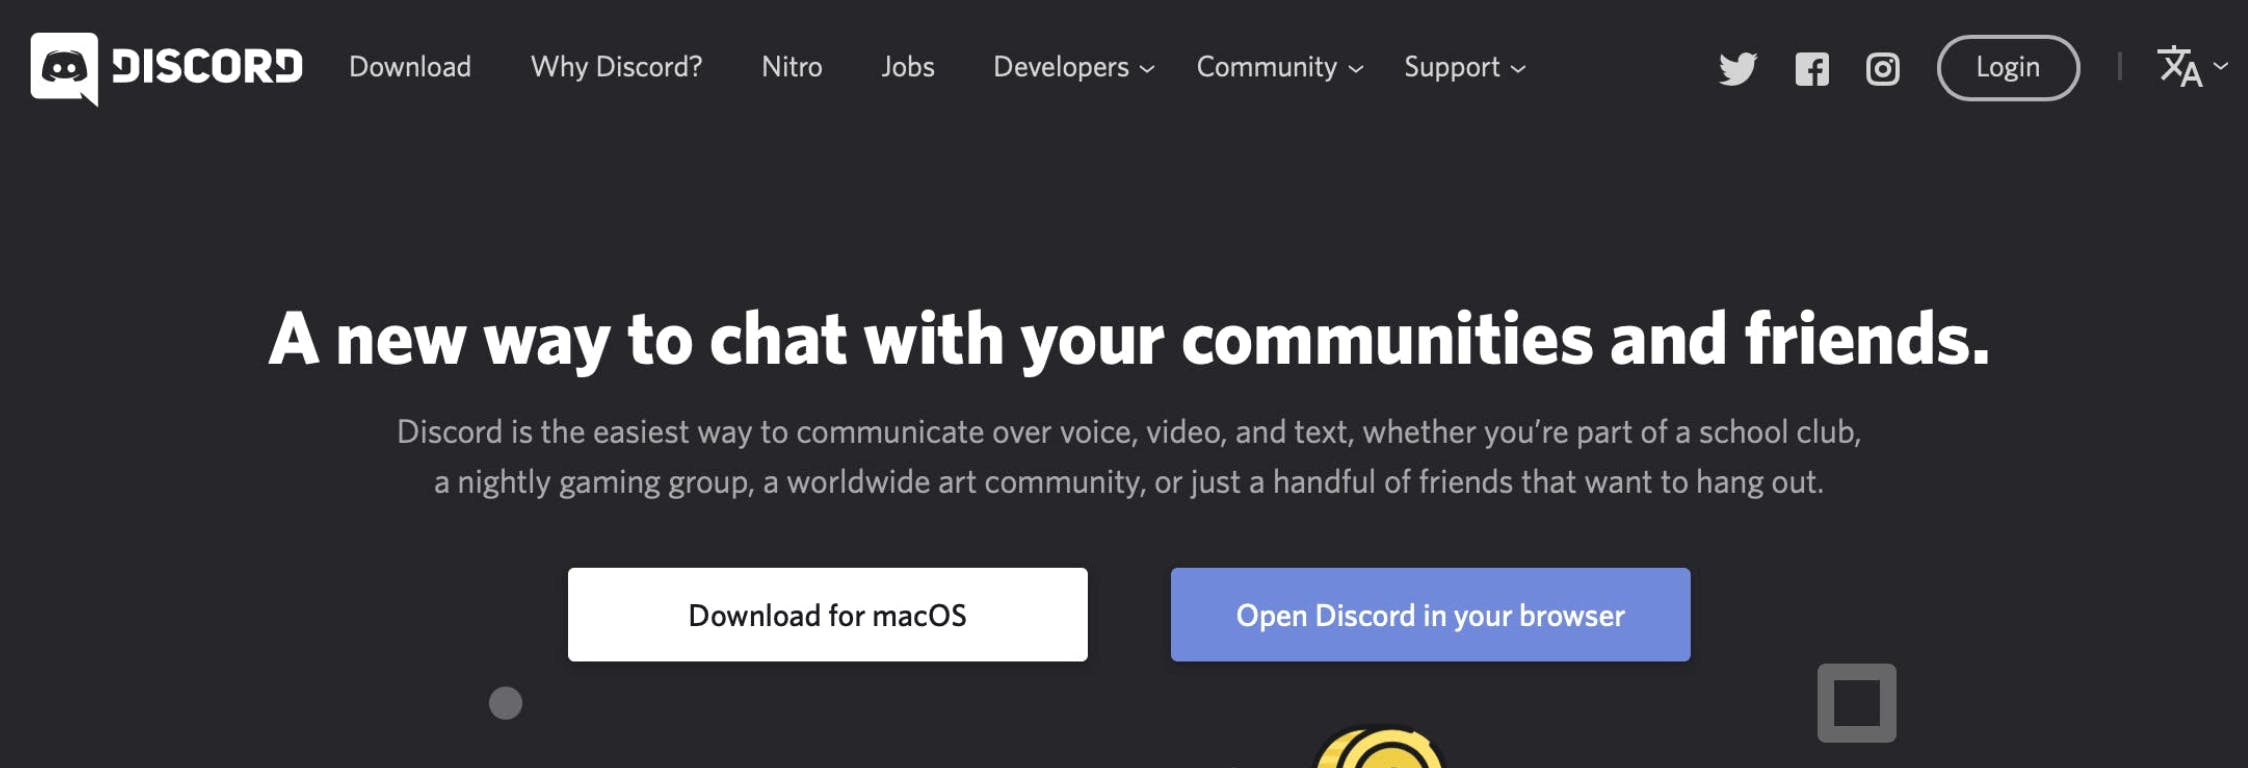 Discord App homepage